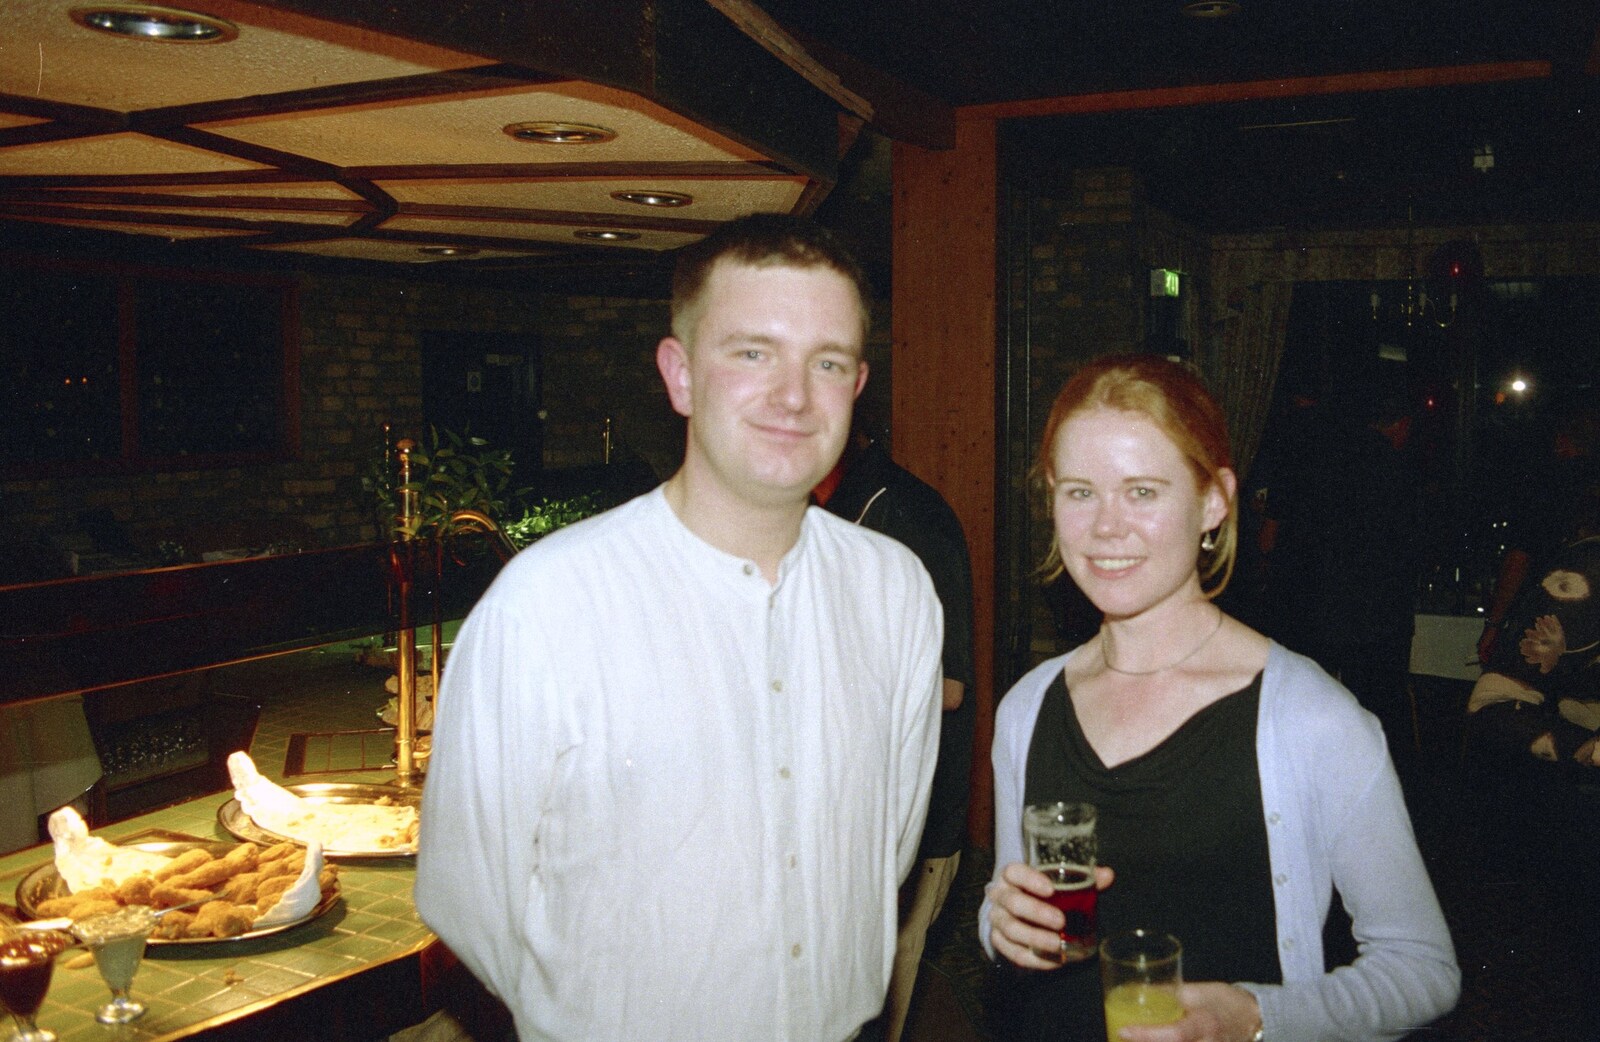 Nosher and Catherine from Paula's 3G Lab Wedding Reception, Huntingdon, Cambridgeshire - 4th September 2000